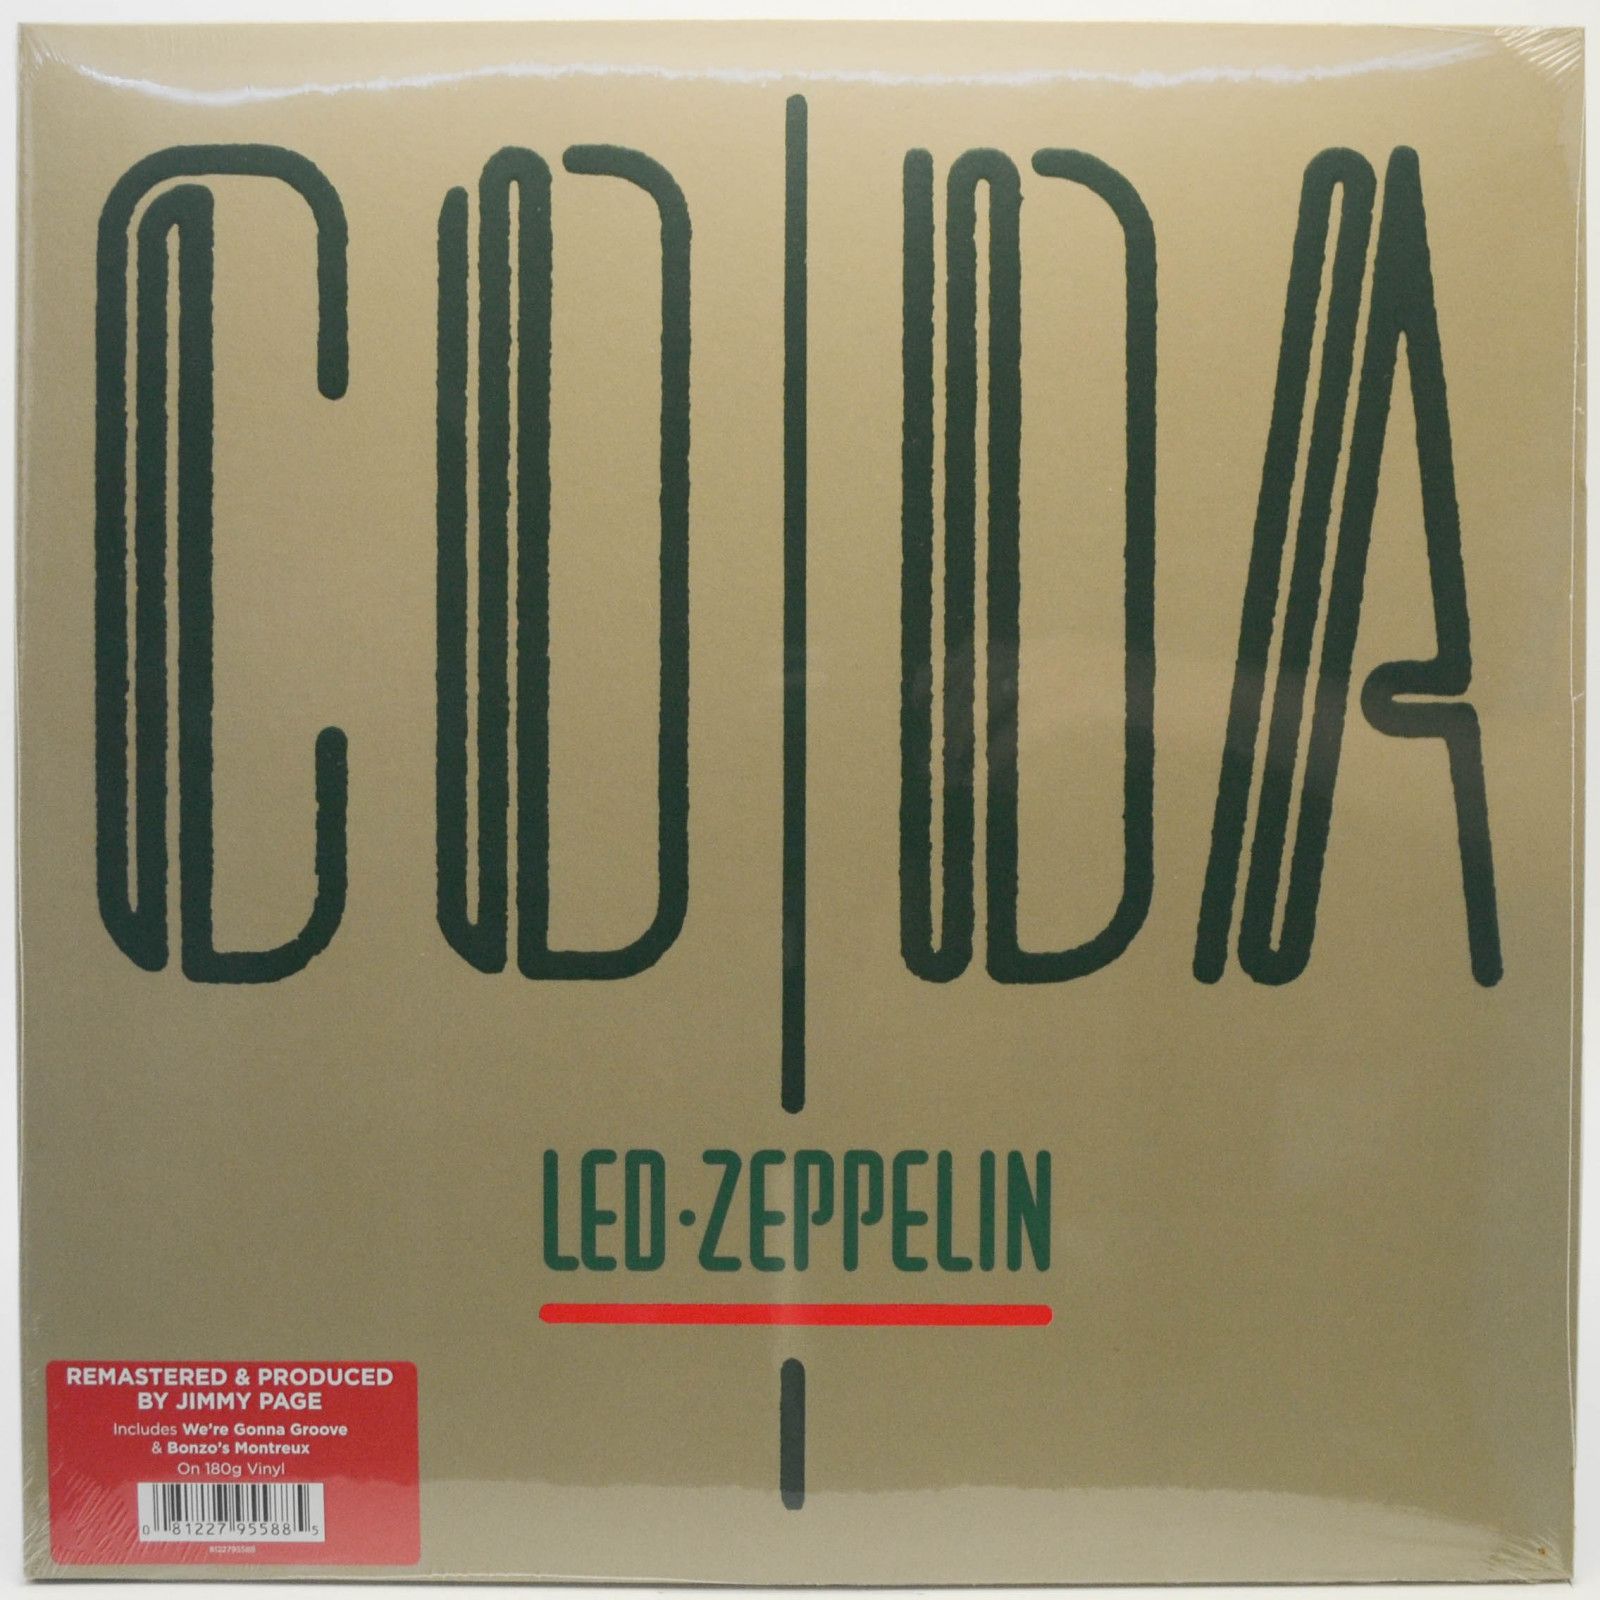 Led Zeppelin — Coda, 1982